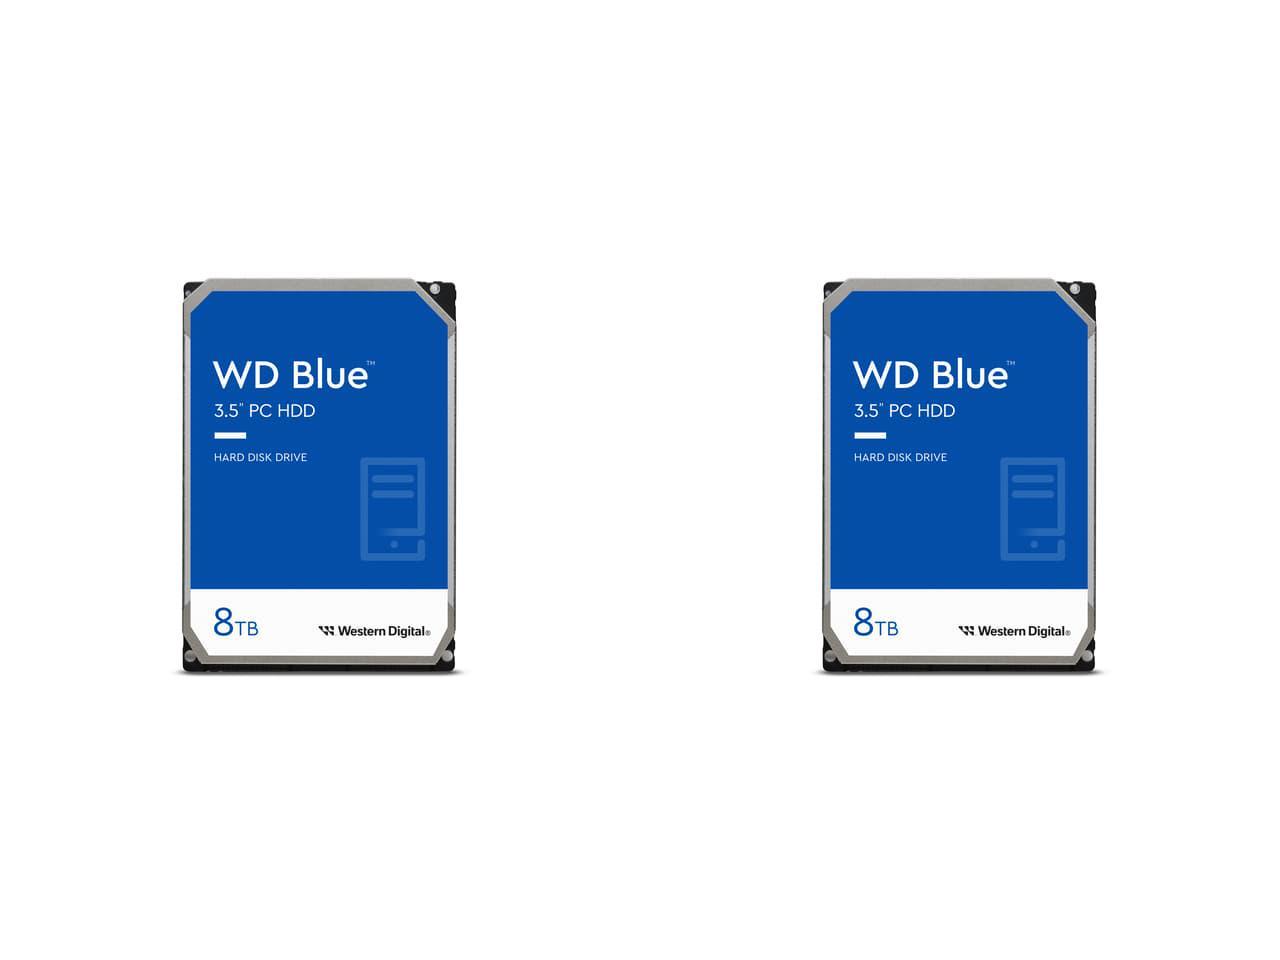 2 x WD Blue 8TB Desktop Hard Disk Drives 5640 RPM $220 + Free Shipping